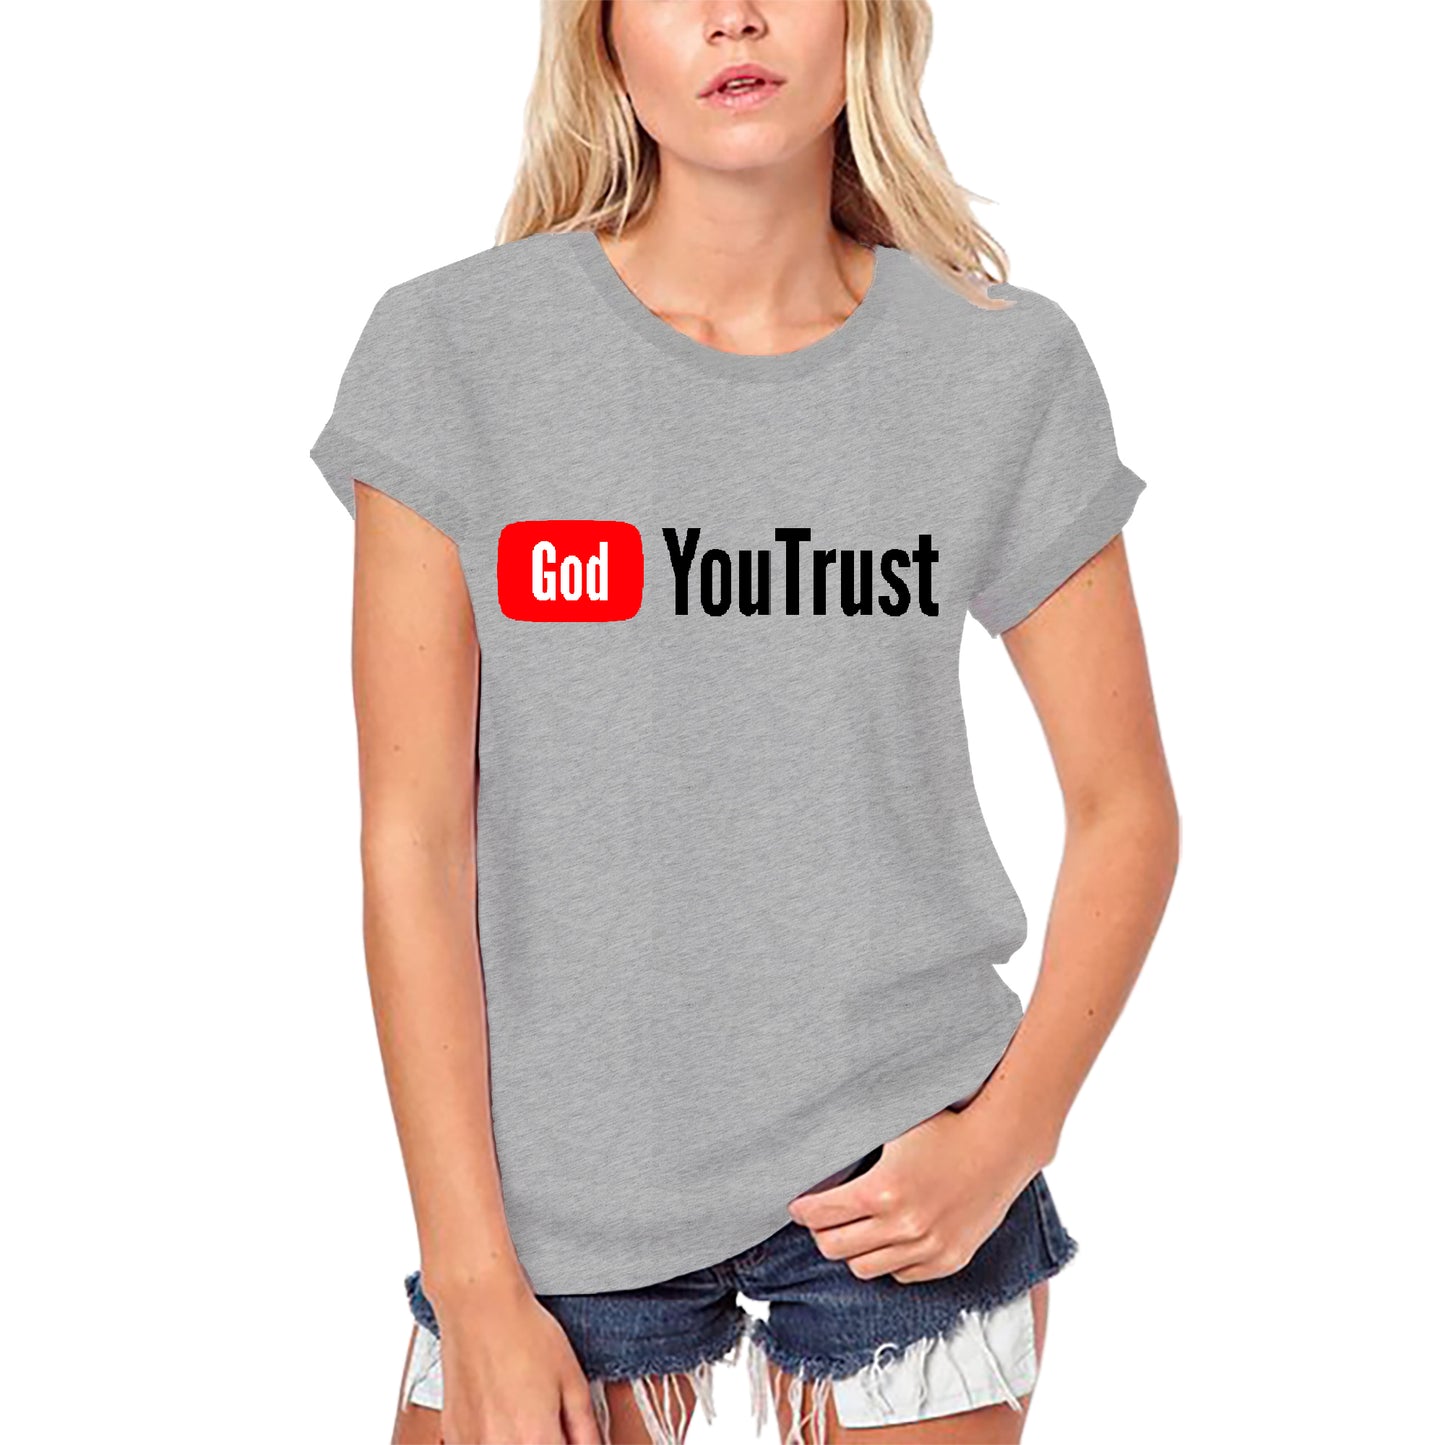 ULTRABASIC Women's Organic Religious T-Shirt God You Trust - Christ Shirt